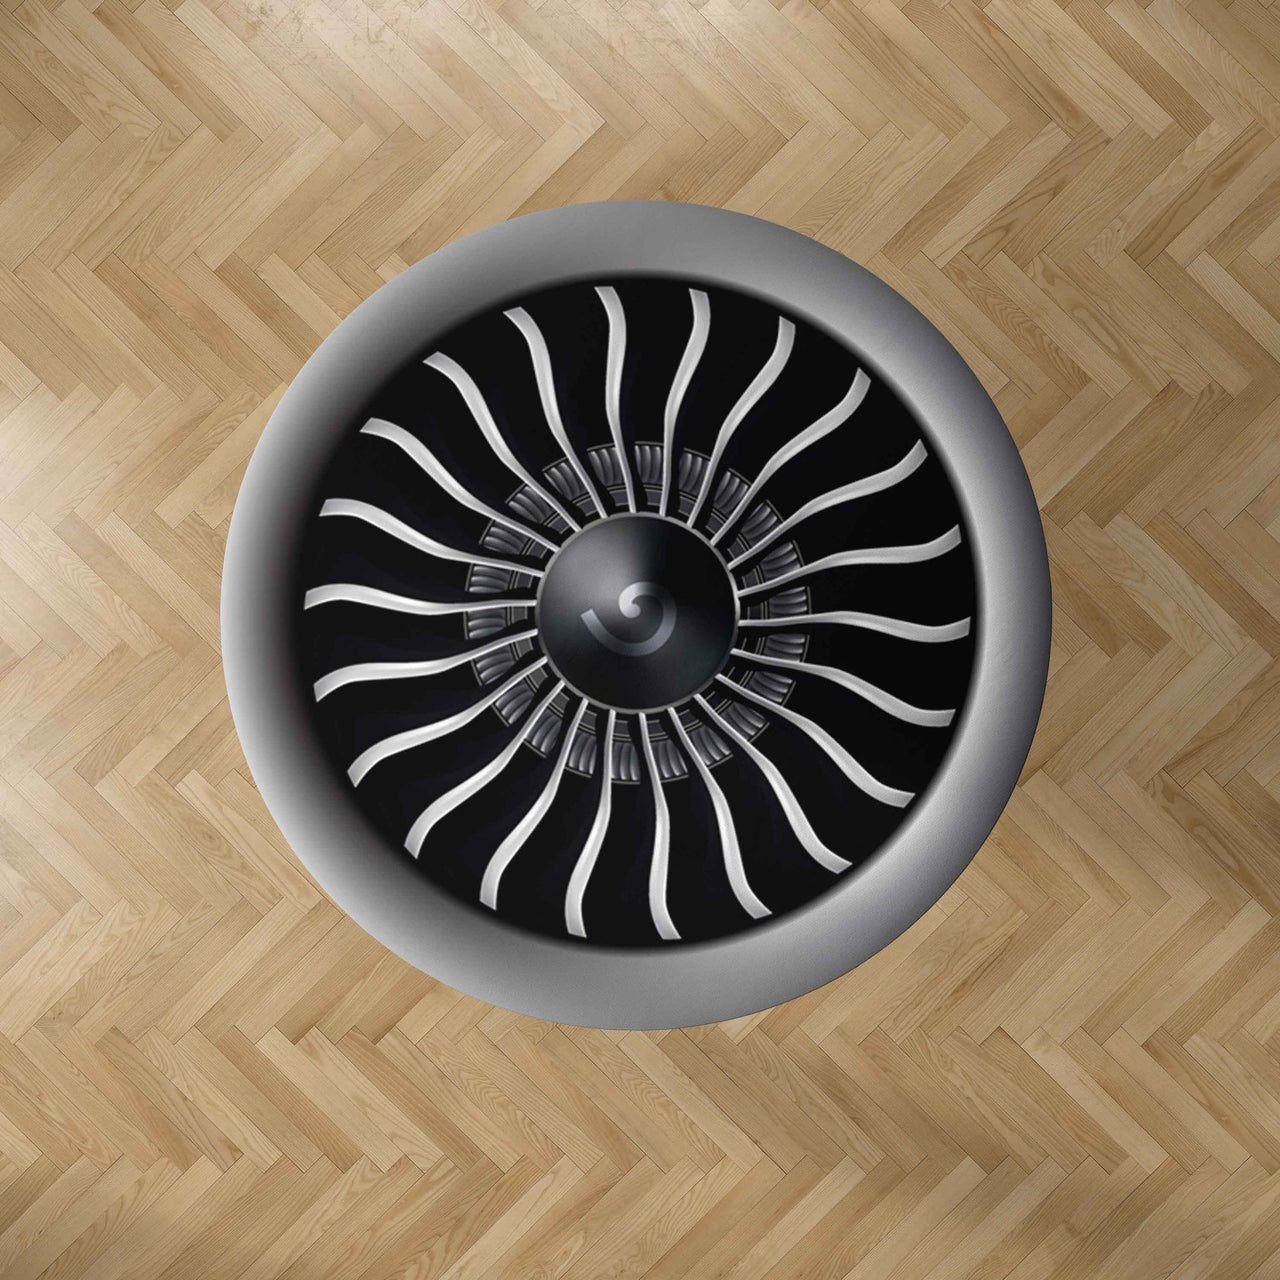 Super Cool Jet Engine Designed Carpet & Floor Mats (Round)